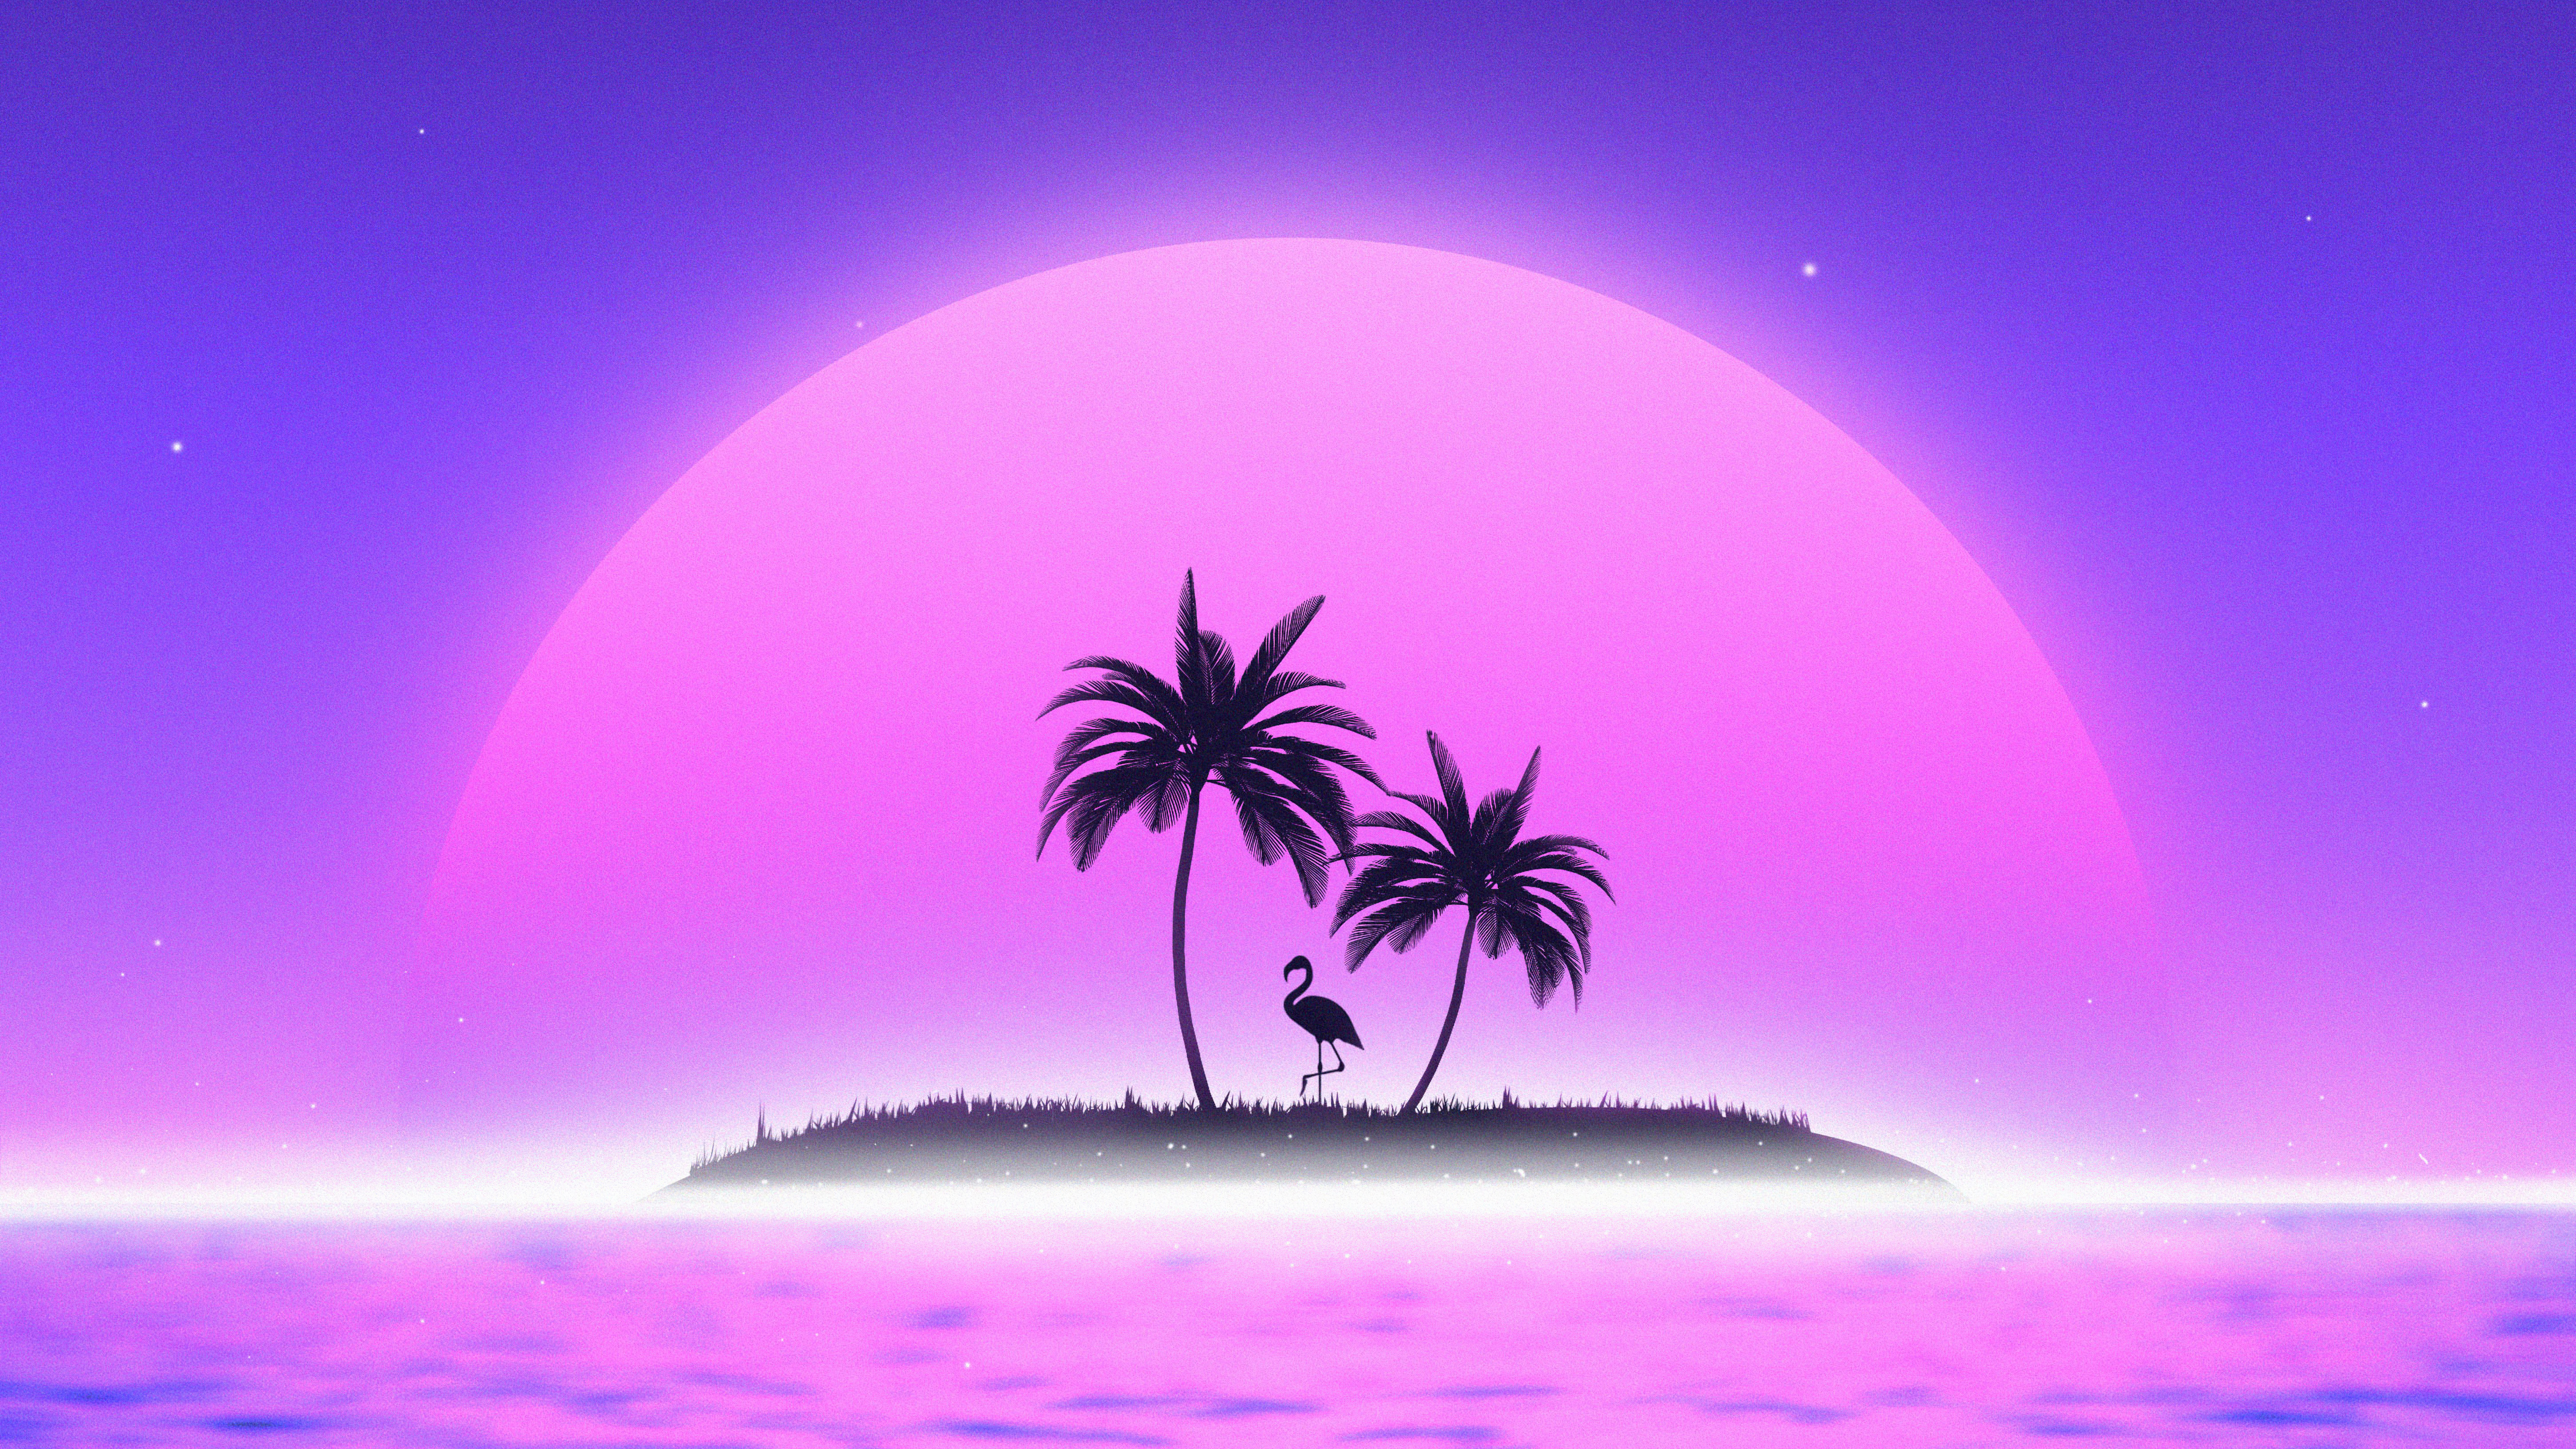 General 5120x2880 exhozt digital art artwork illustration landscape sea water island palm trees Sun stars flamingos birds animals nature minimalism